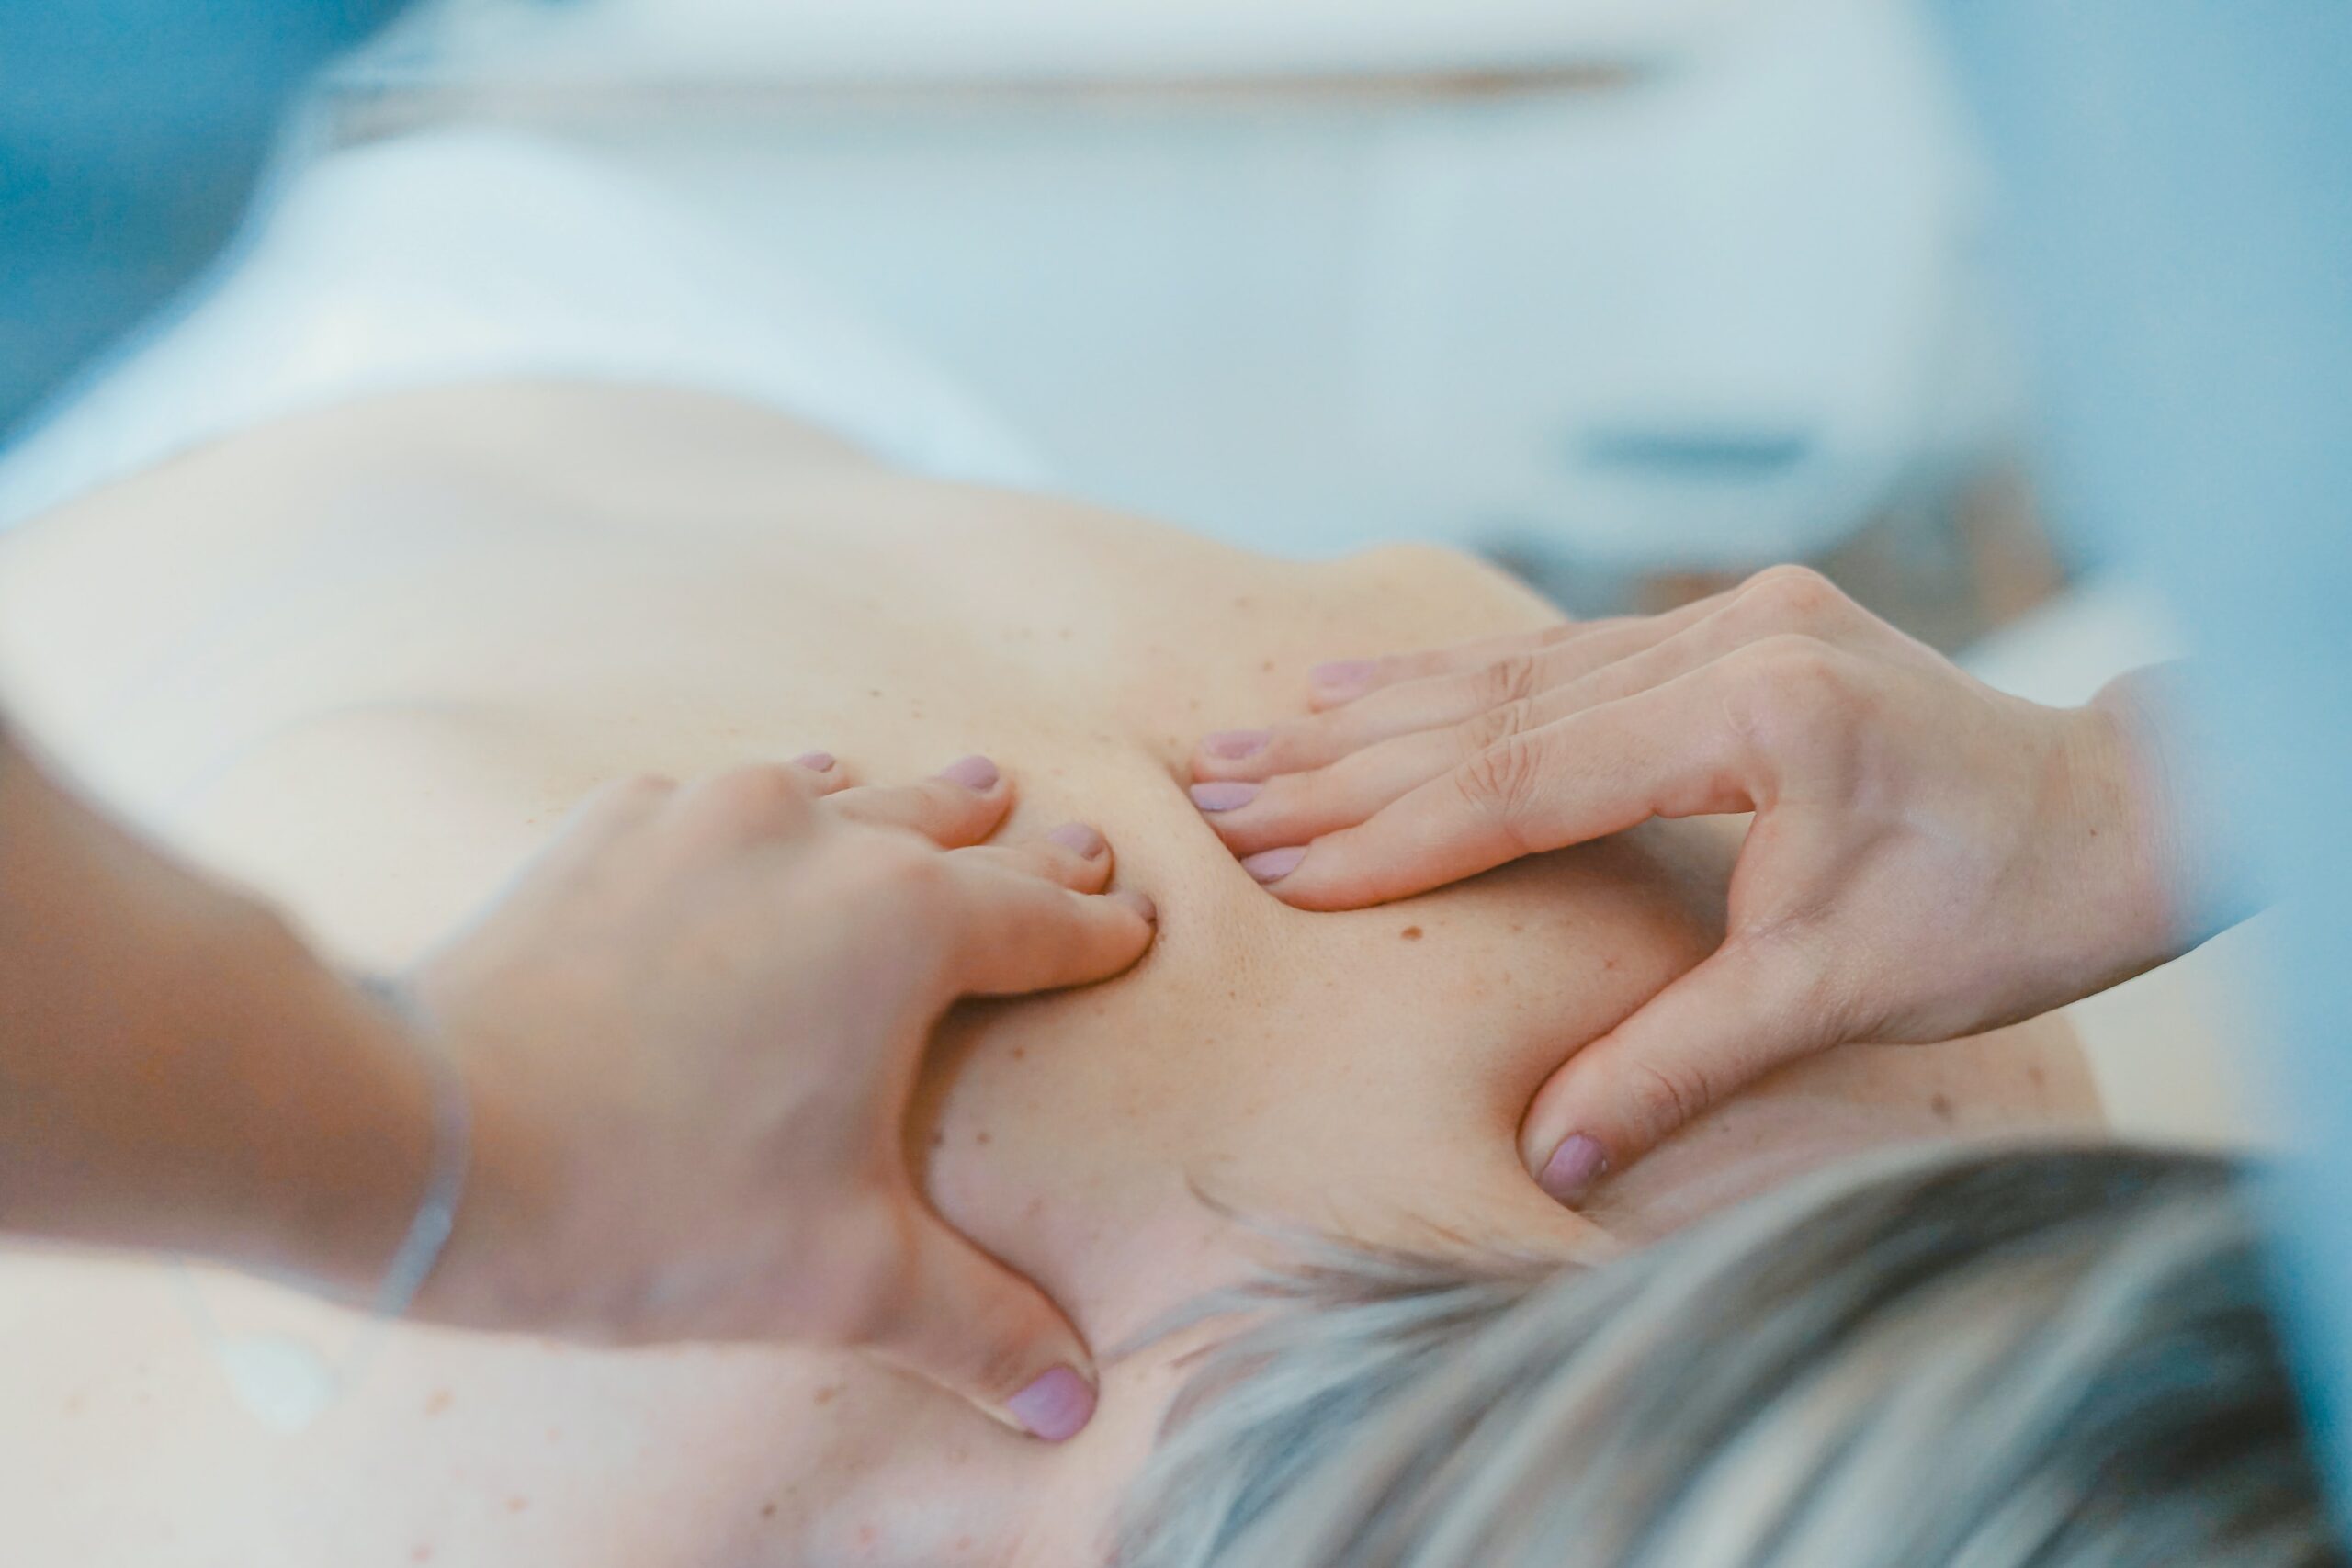 7 Deep Tissue Massage Benefits, Including Treating Chronic Back Pain, Ke  Wynn Medical Fitness Center, Clinical Massage & Rehab, Sports Massage, Medical Fitness